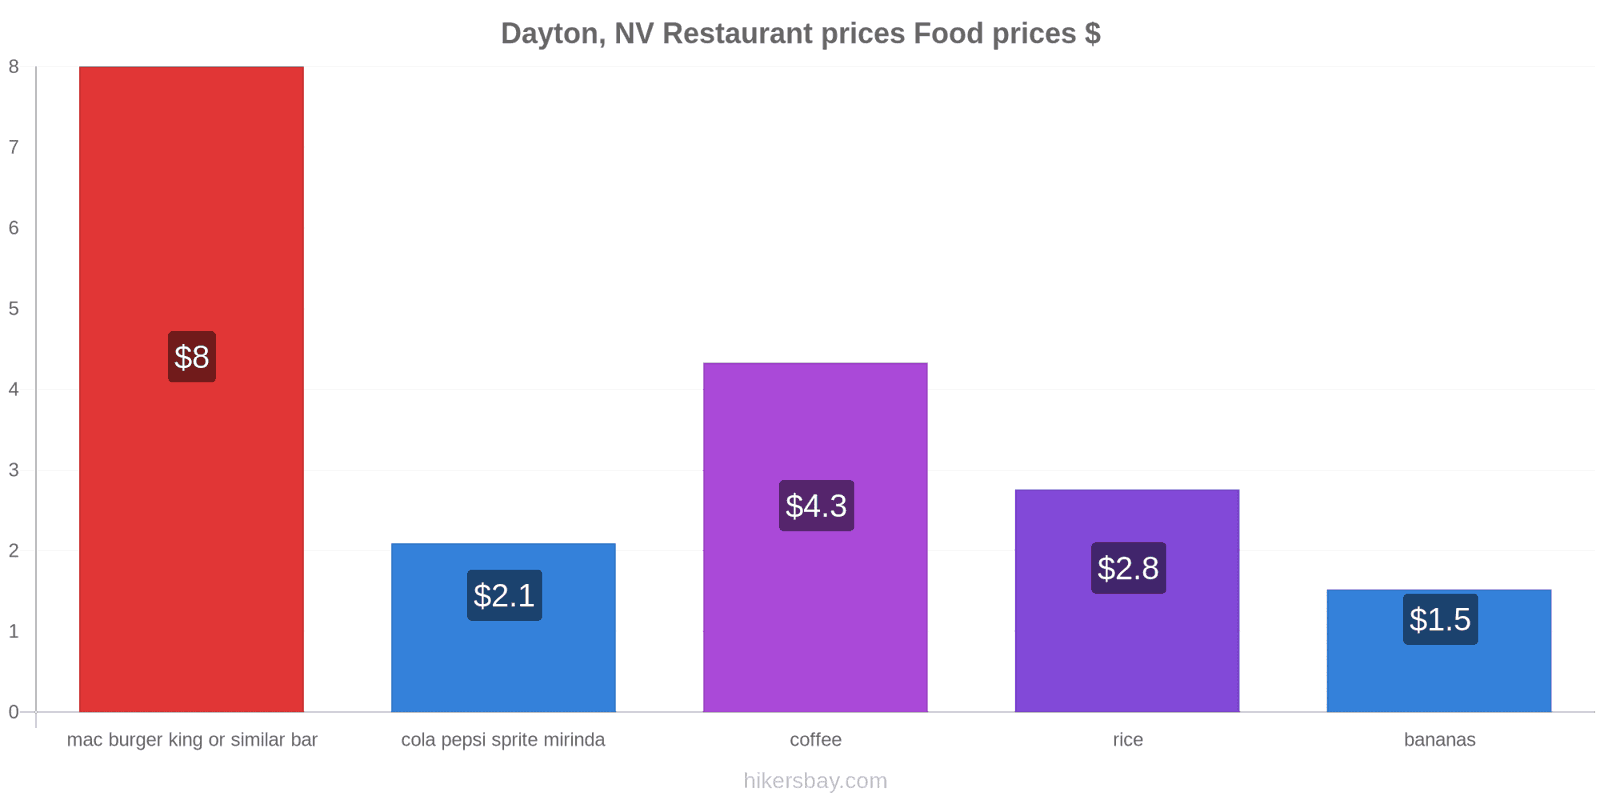 Dayton, NV price changes hikersbay.com